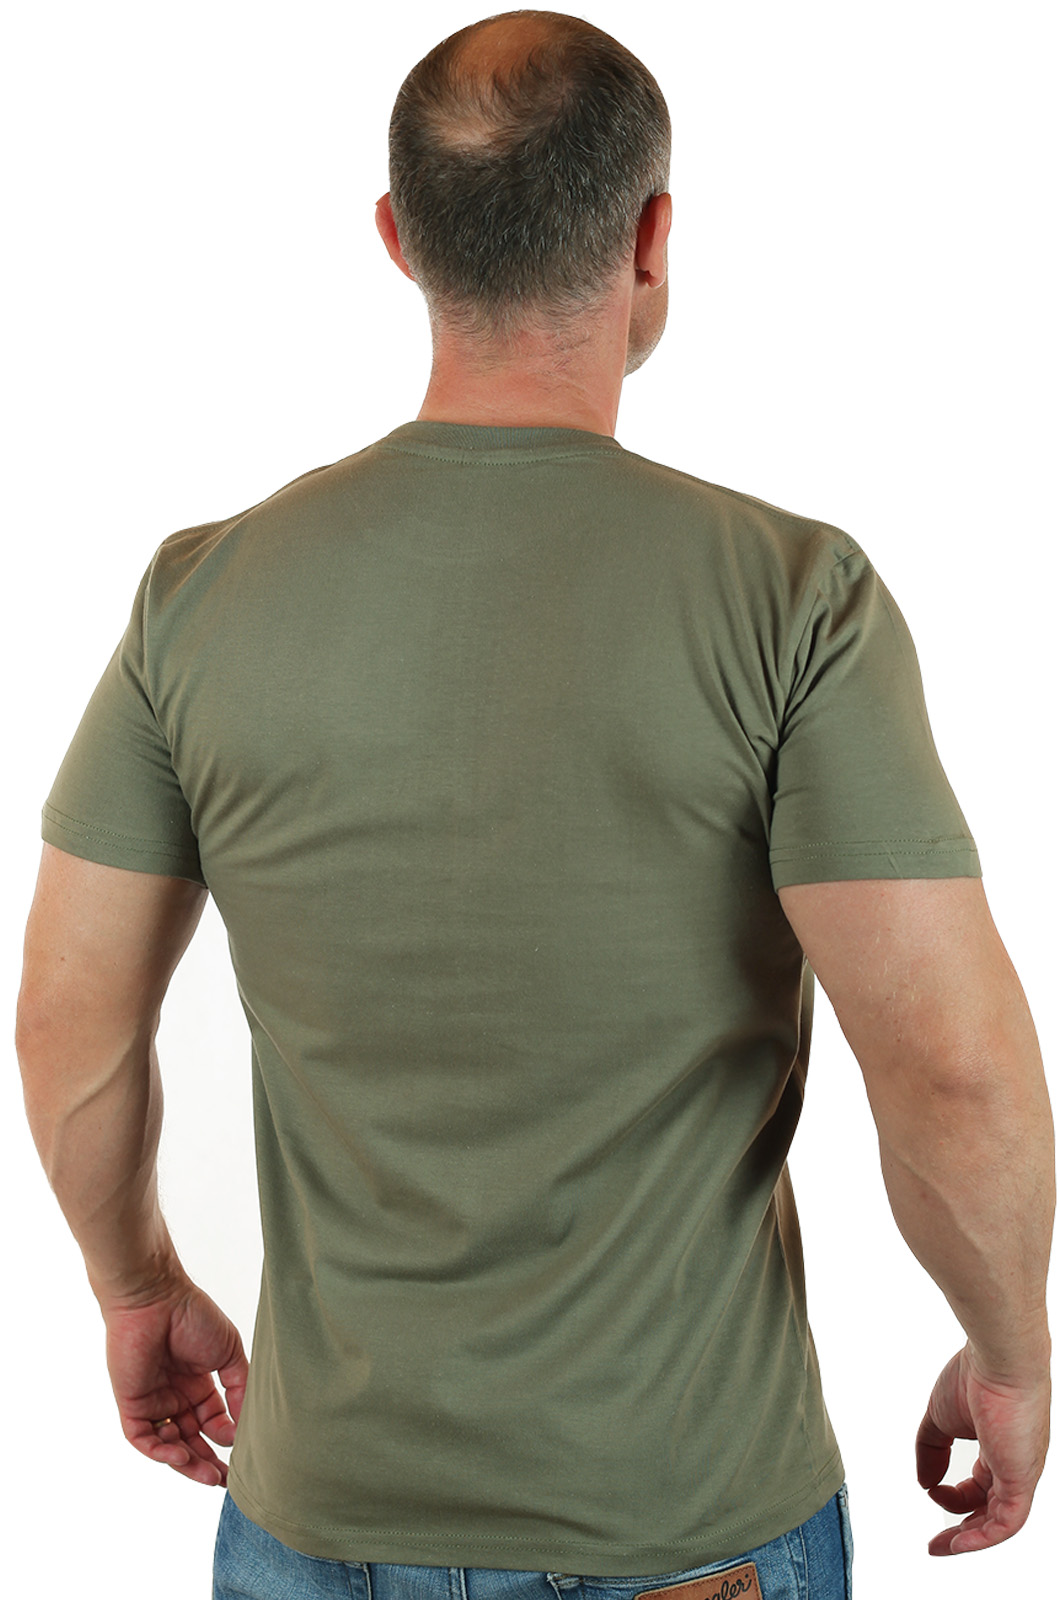 Армейская мужская футболка "Тихоокеанский флот" 